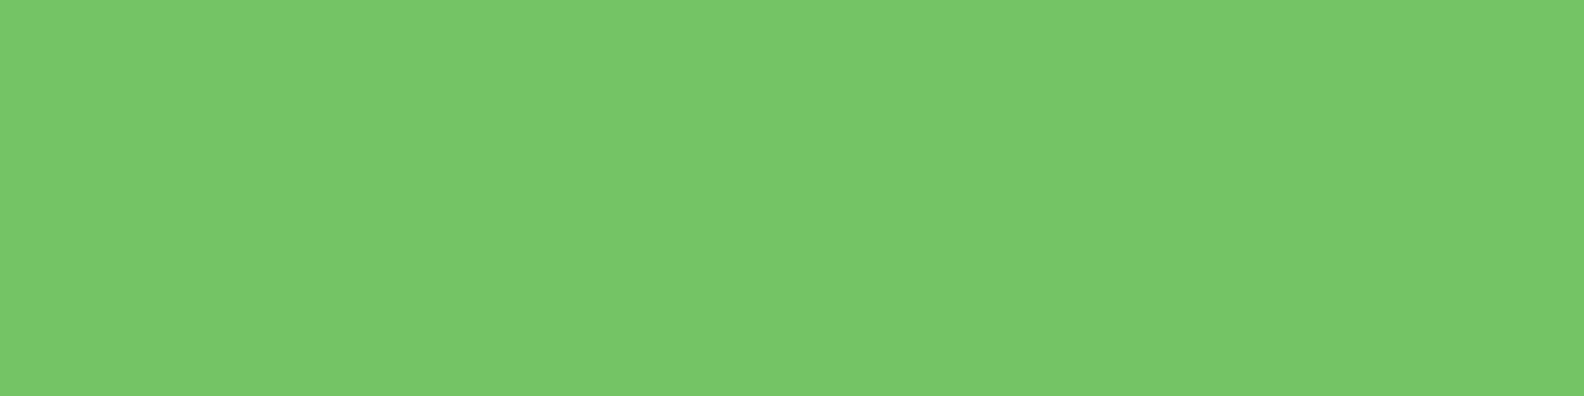 1584x396 Mantis Solid Color Background